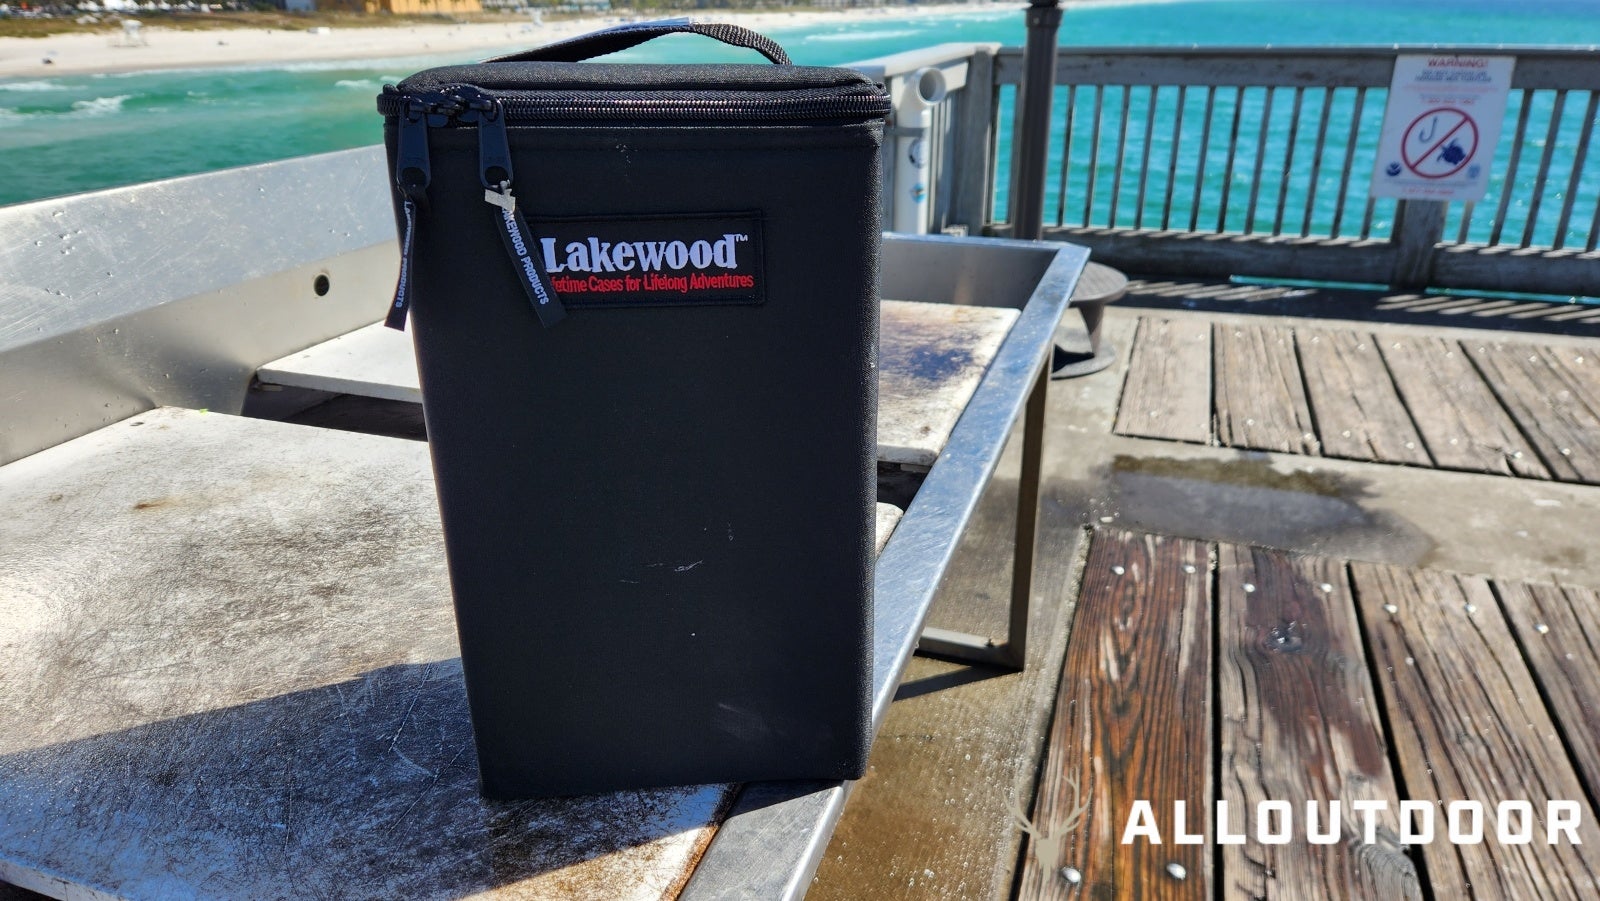 AllOutdoor Review: Lakewood Swimbait Deposit Box